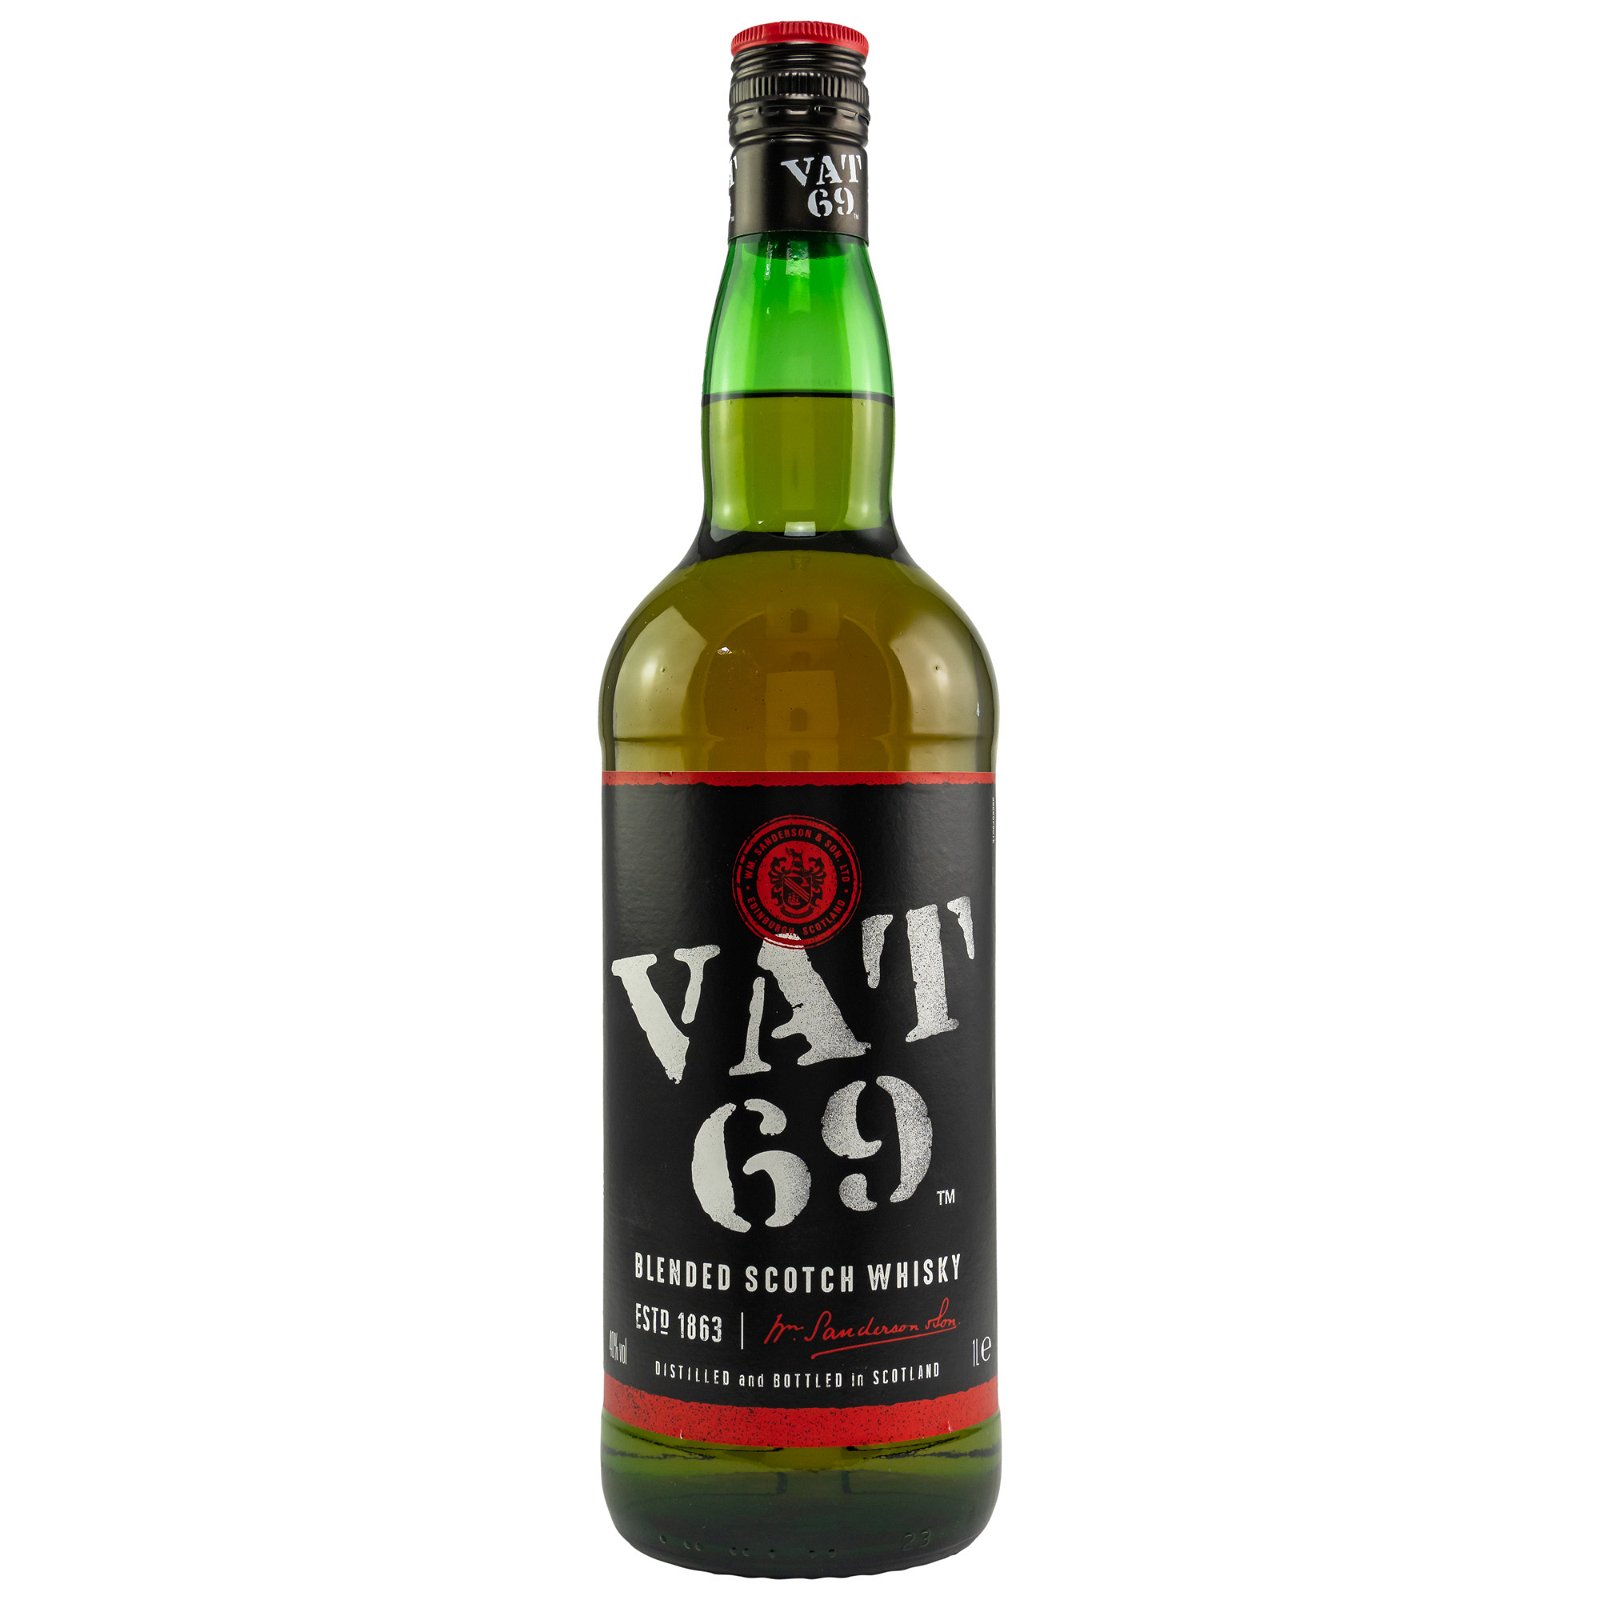 VAT 69 (Liter)